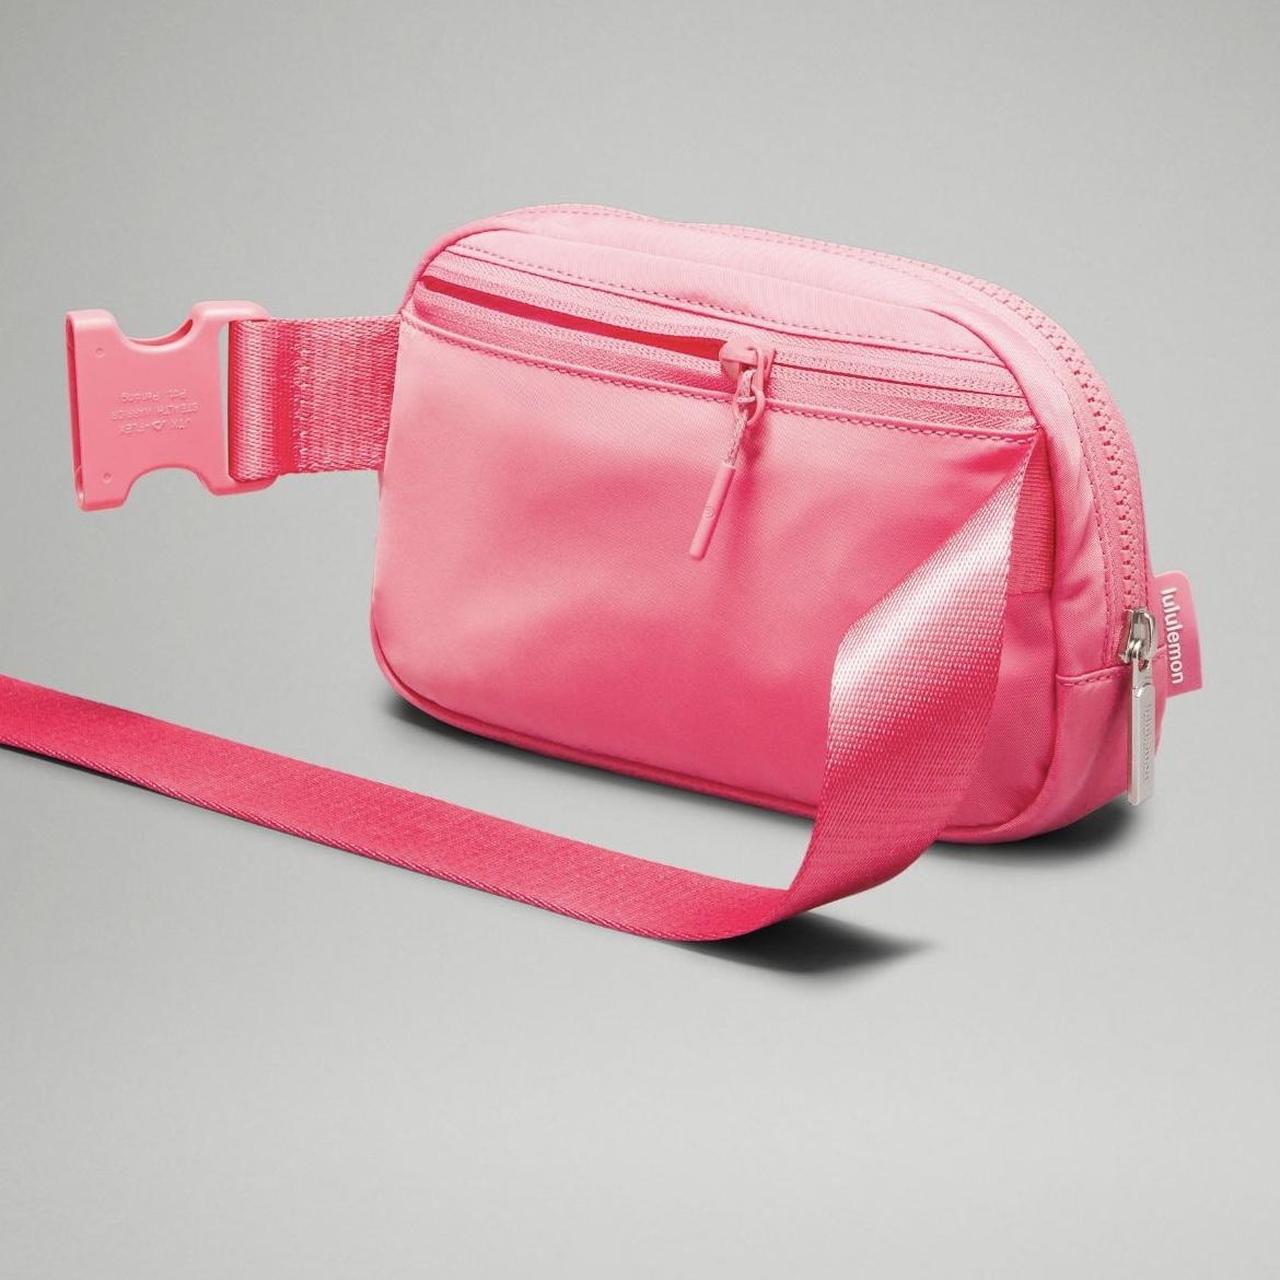 Lululemon Everywhere belt bag Sakura pink size